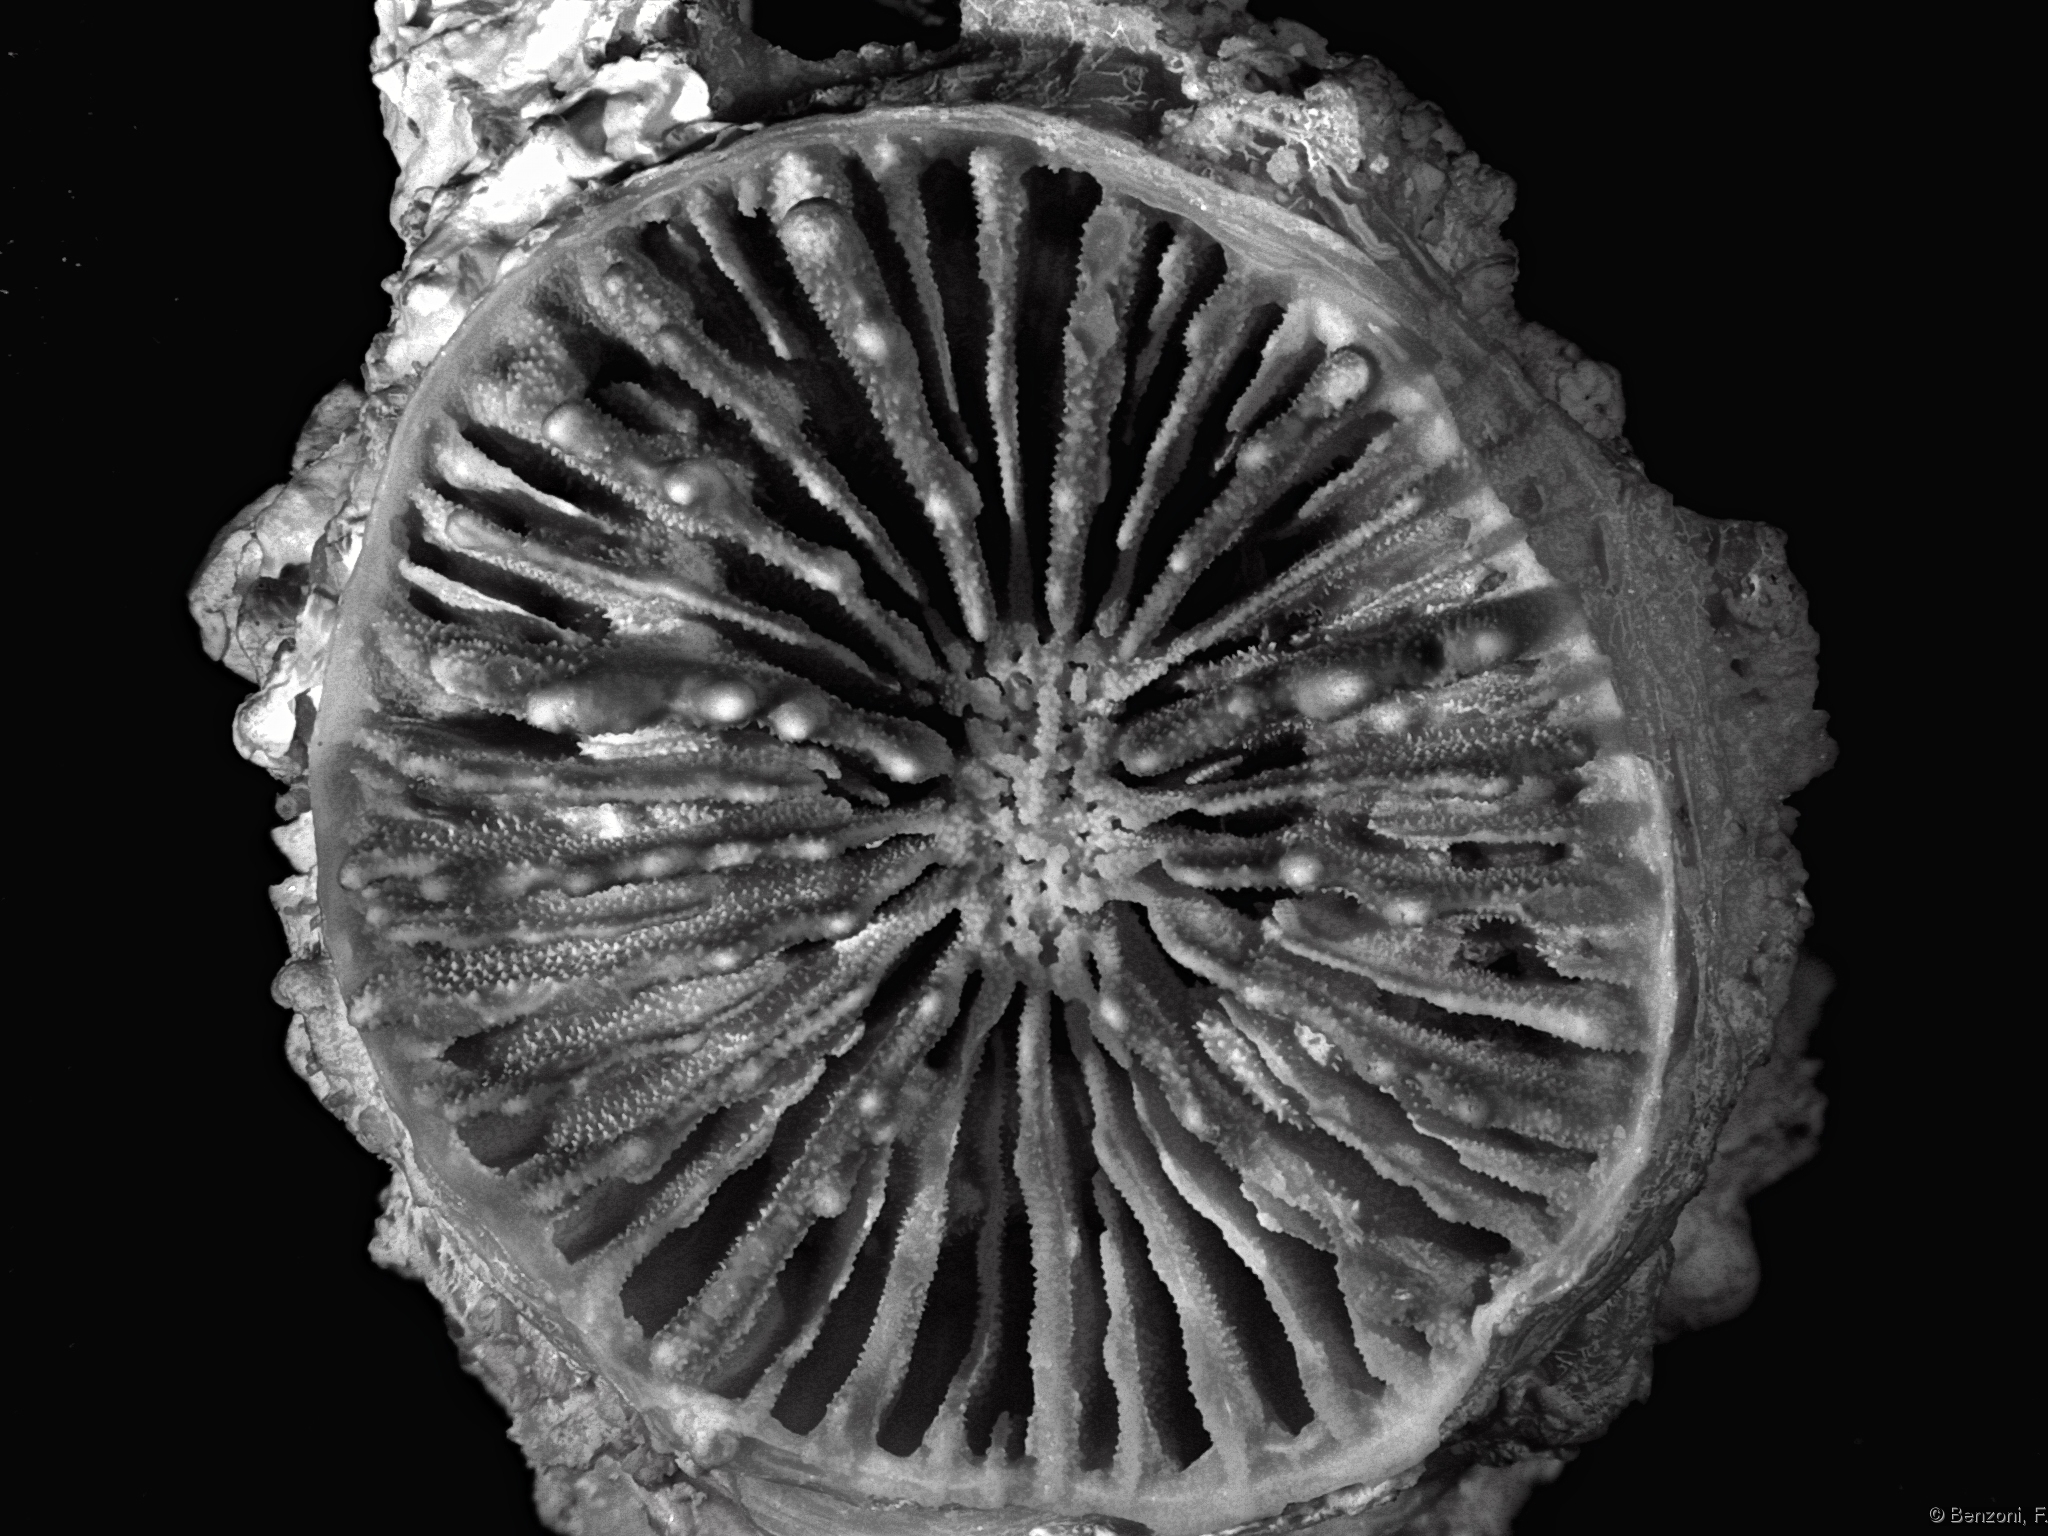 Blastomussa vivida - morphology - HS3289